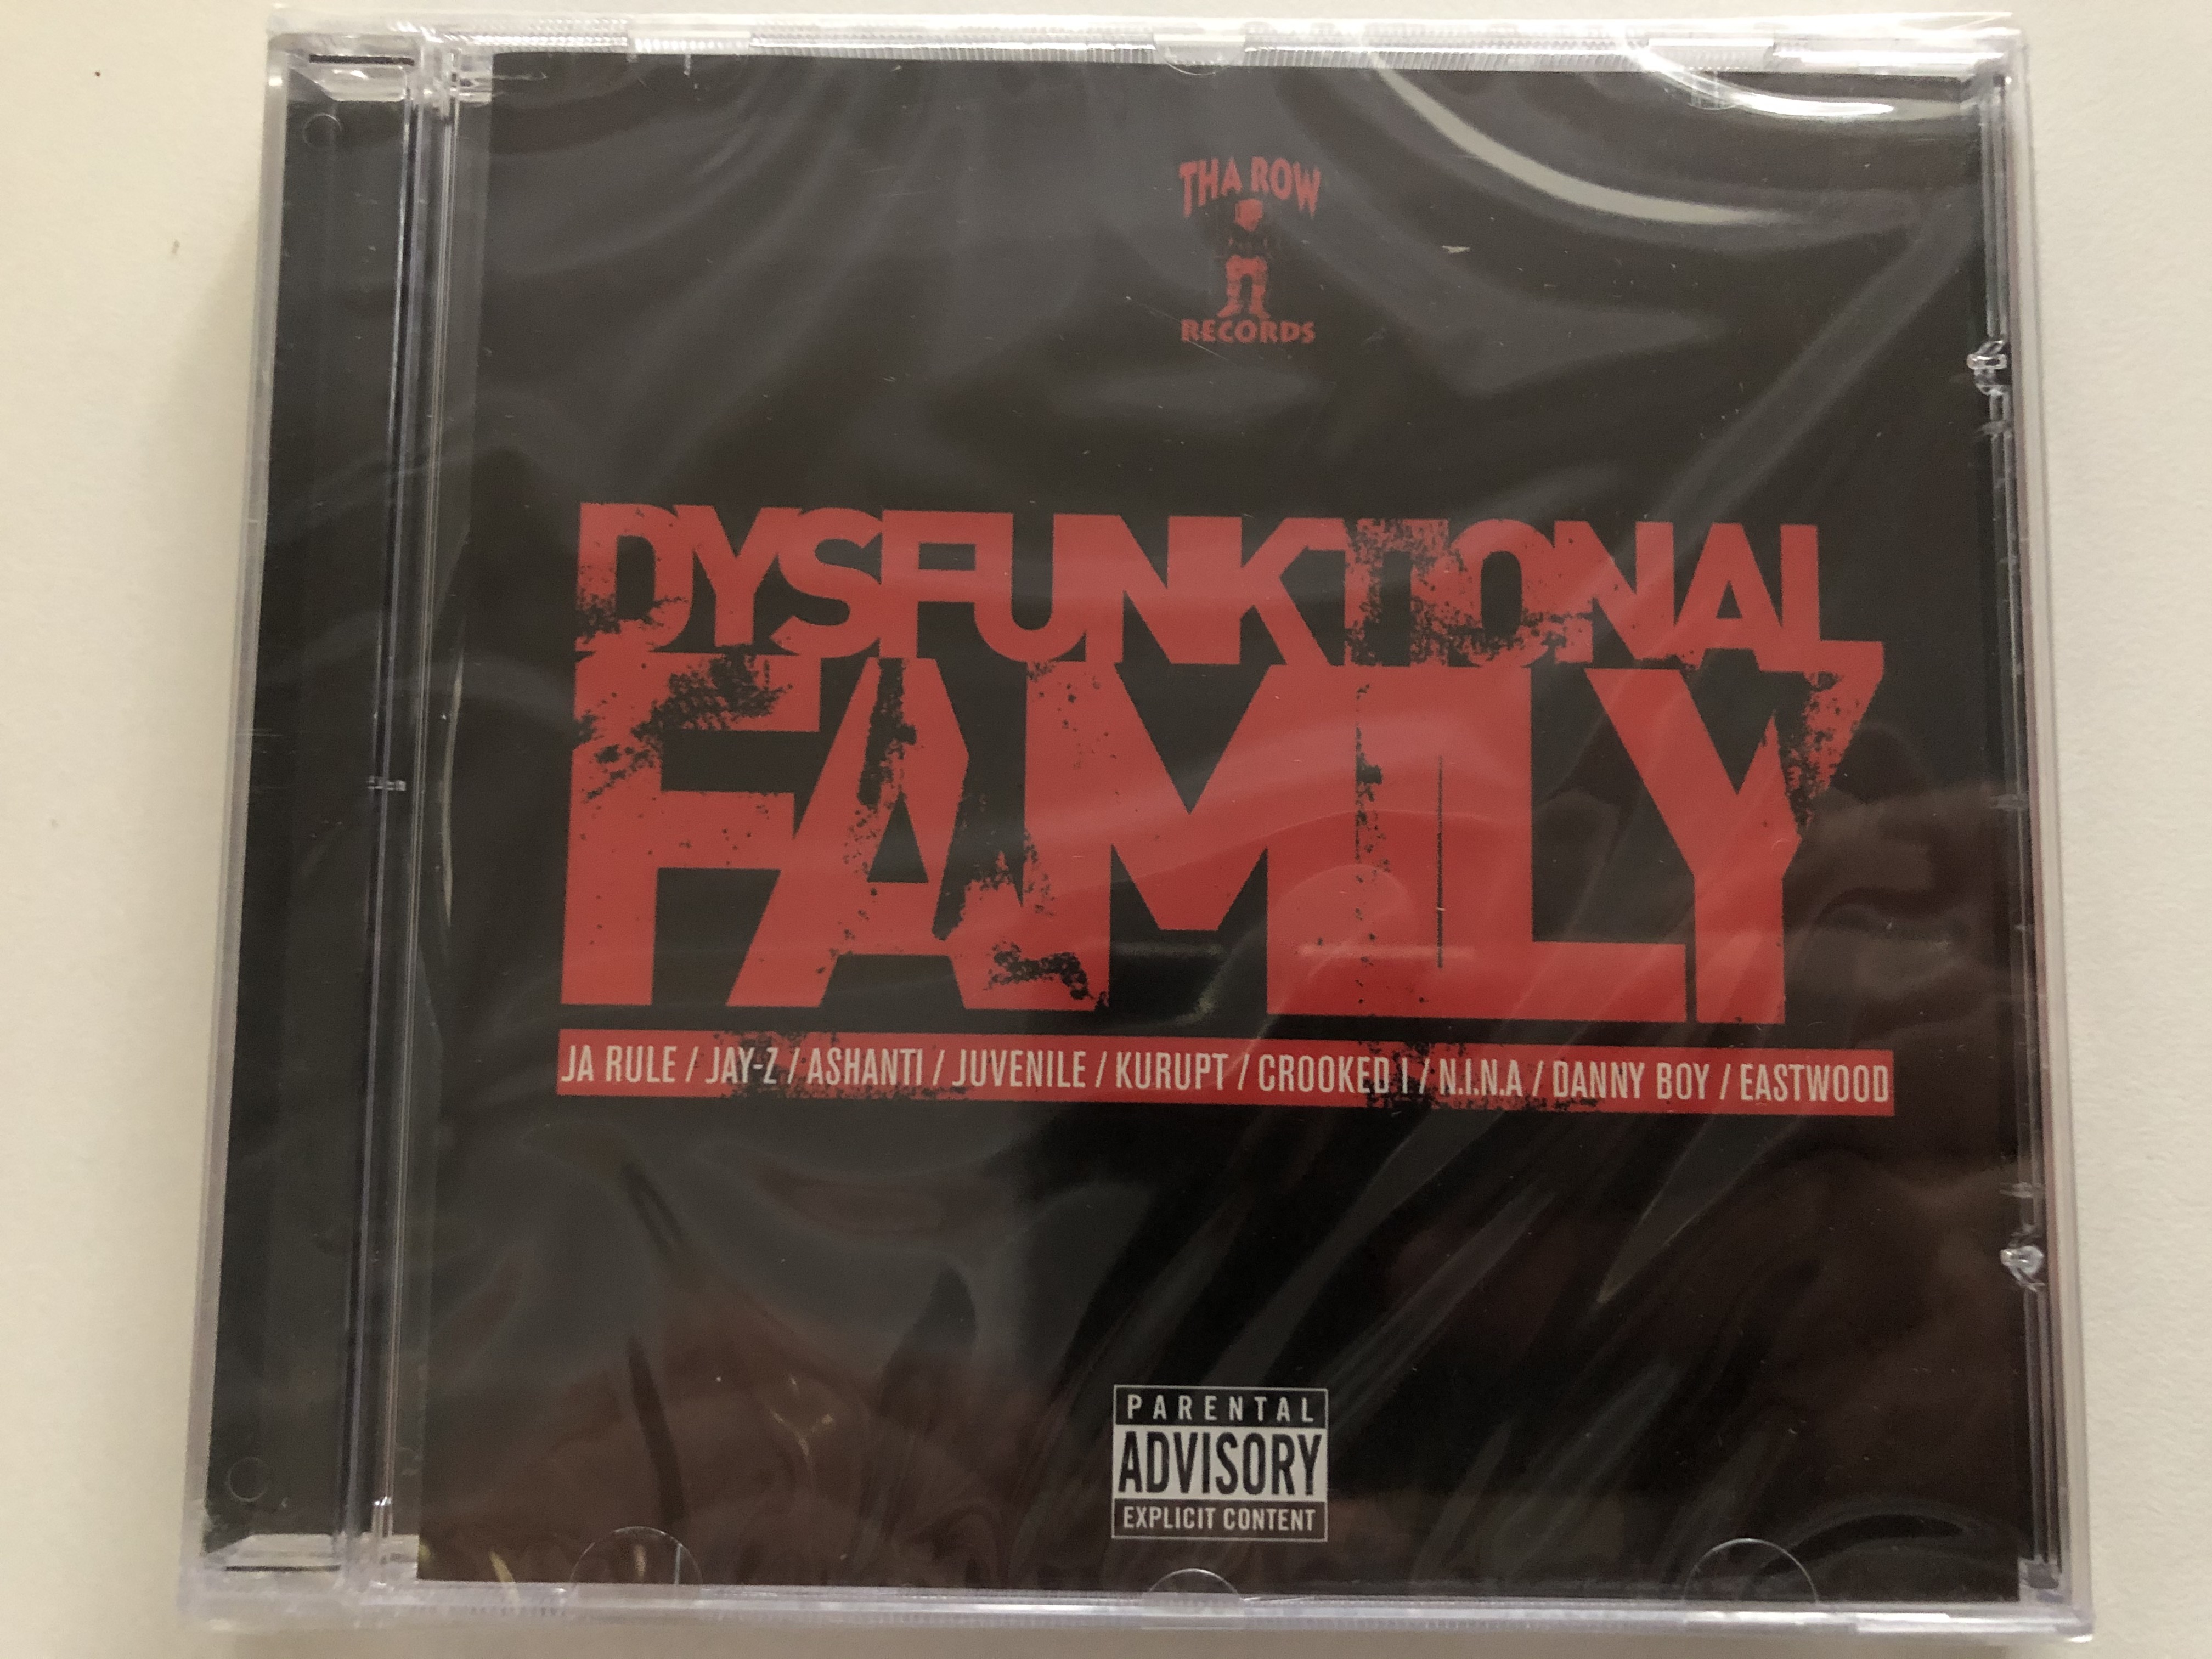 dysfunktional-family-ja-rule-jay-z-ashanti-juvenile-kurupt-crooked-n.i.n.a.-danny-boy-eastwood-death-row-records-audio-cd-2003-pdr1010-1-.jpg